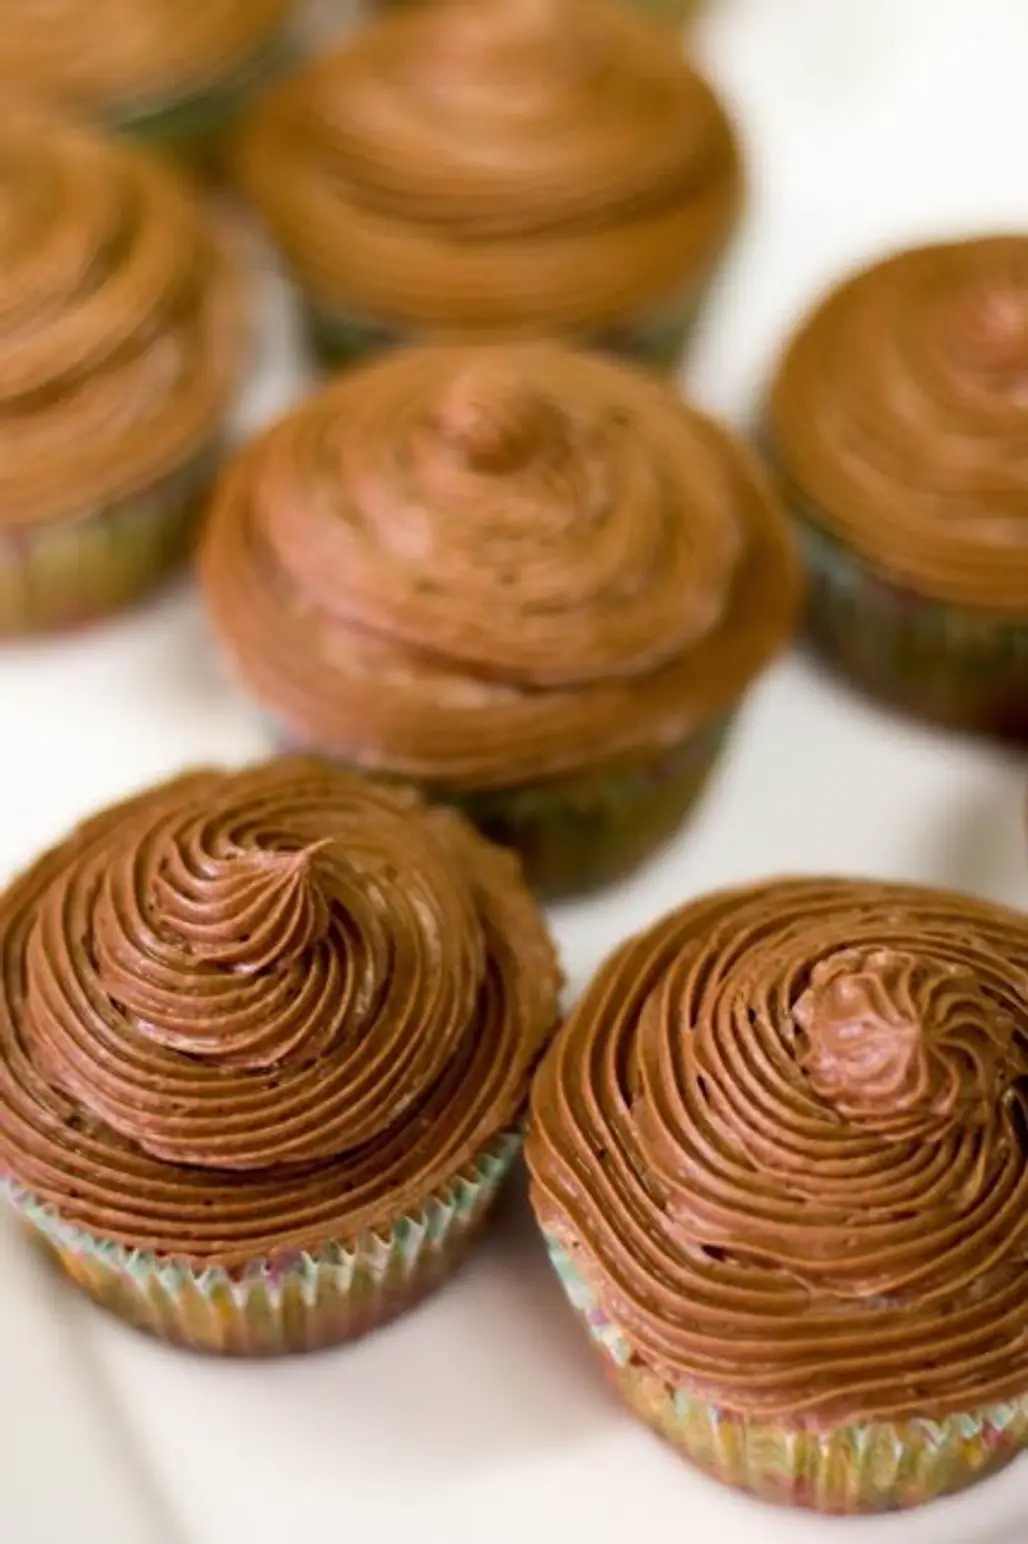 Vanilla Coconut Flour Cupcakes